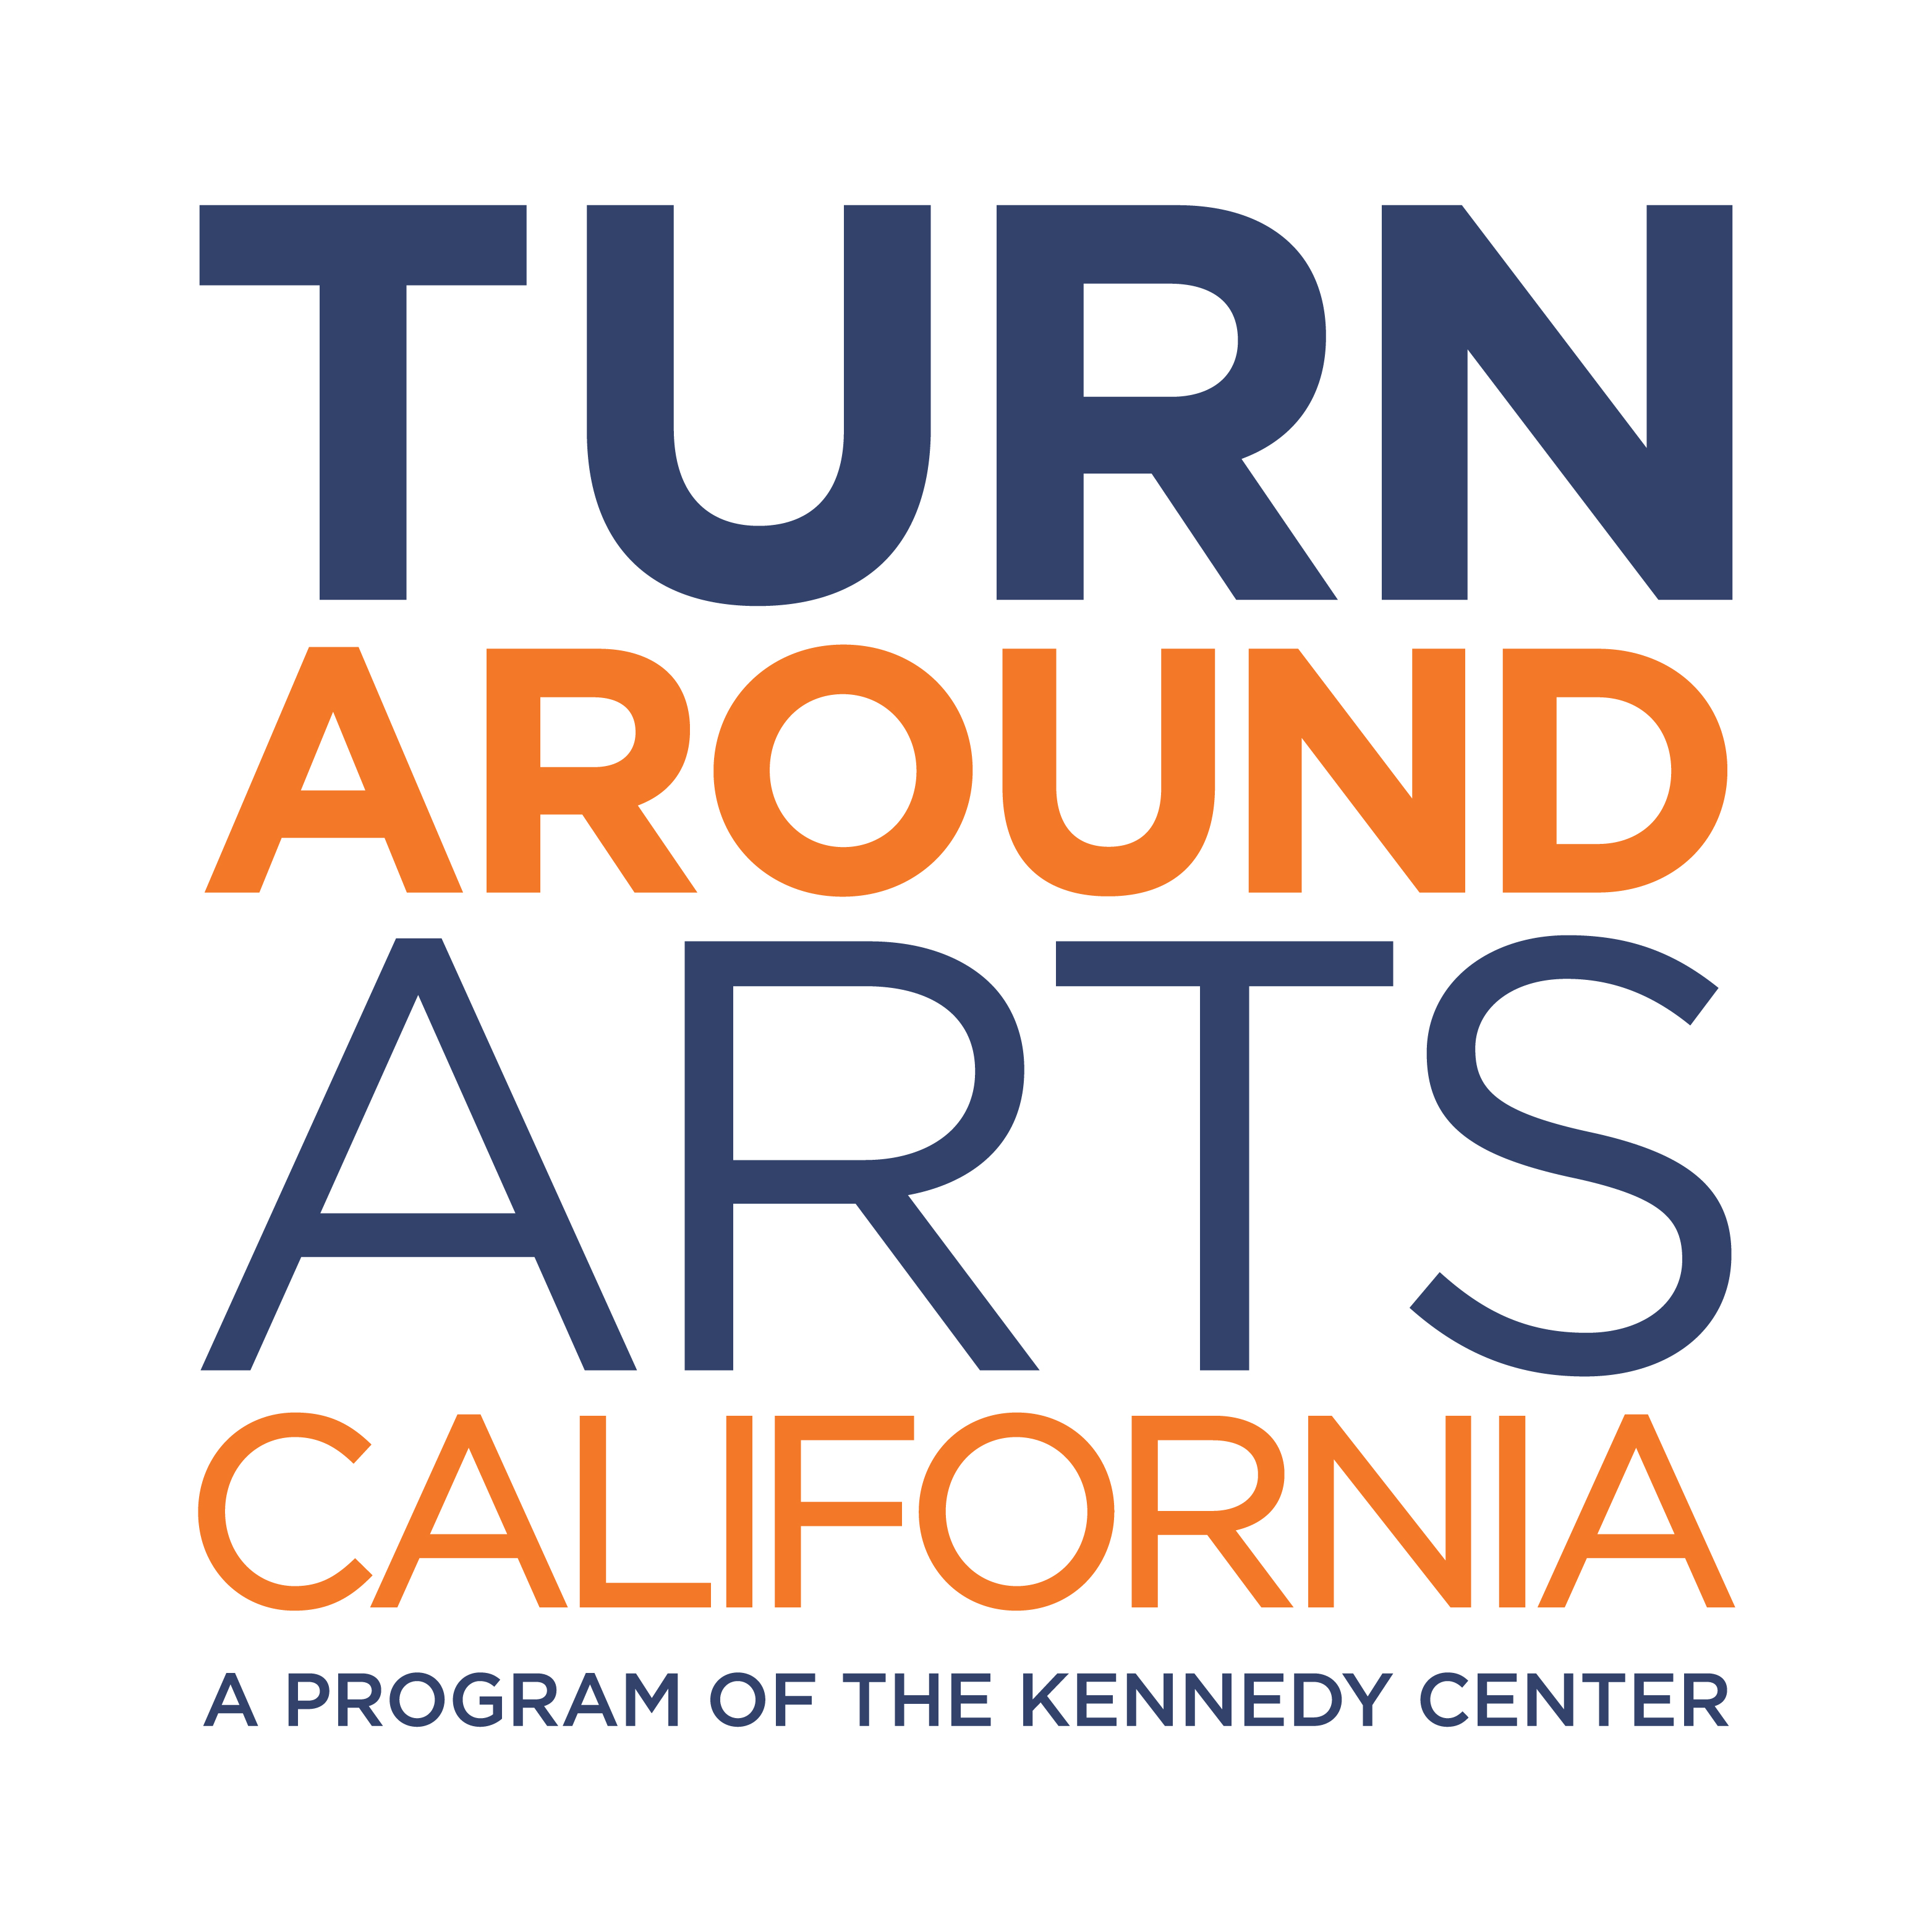 Turnaround Arts California